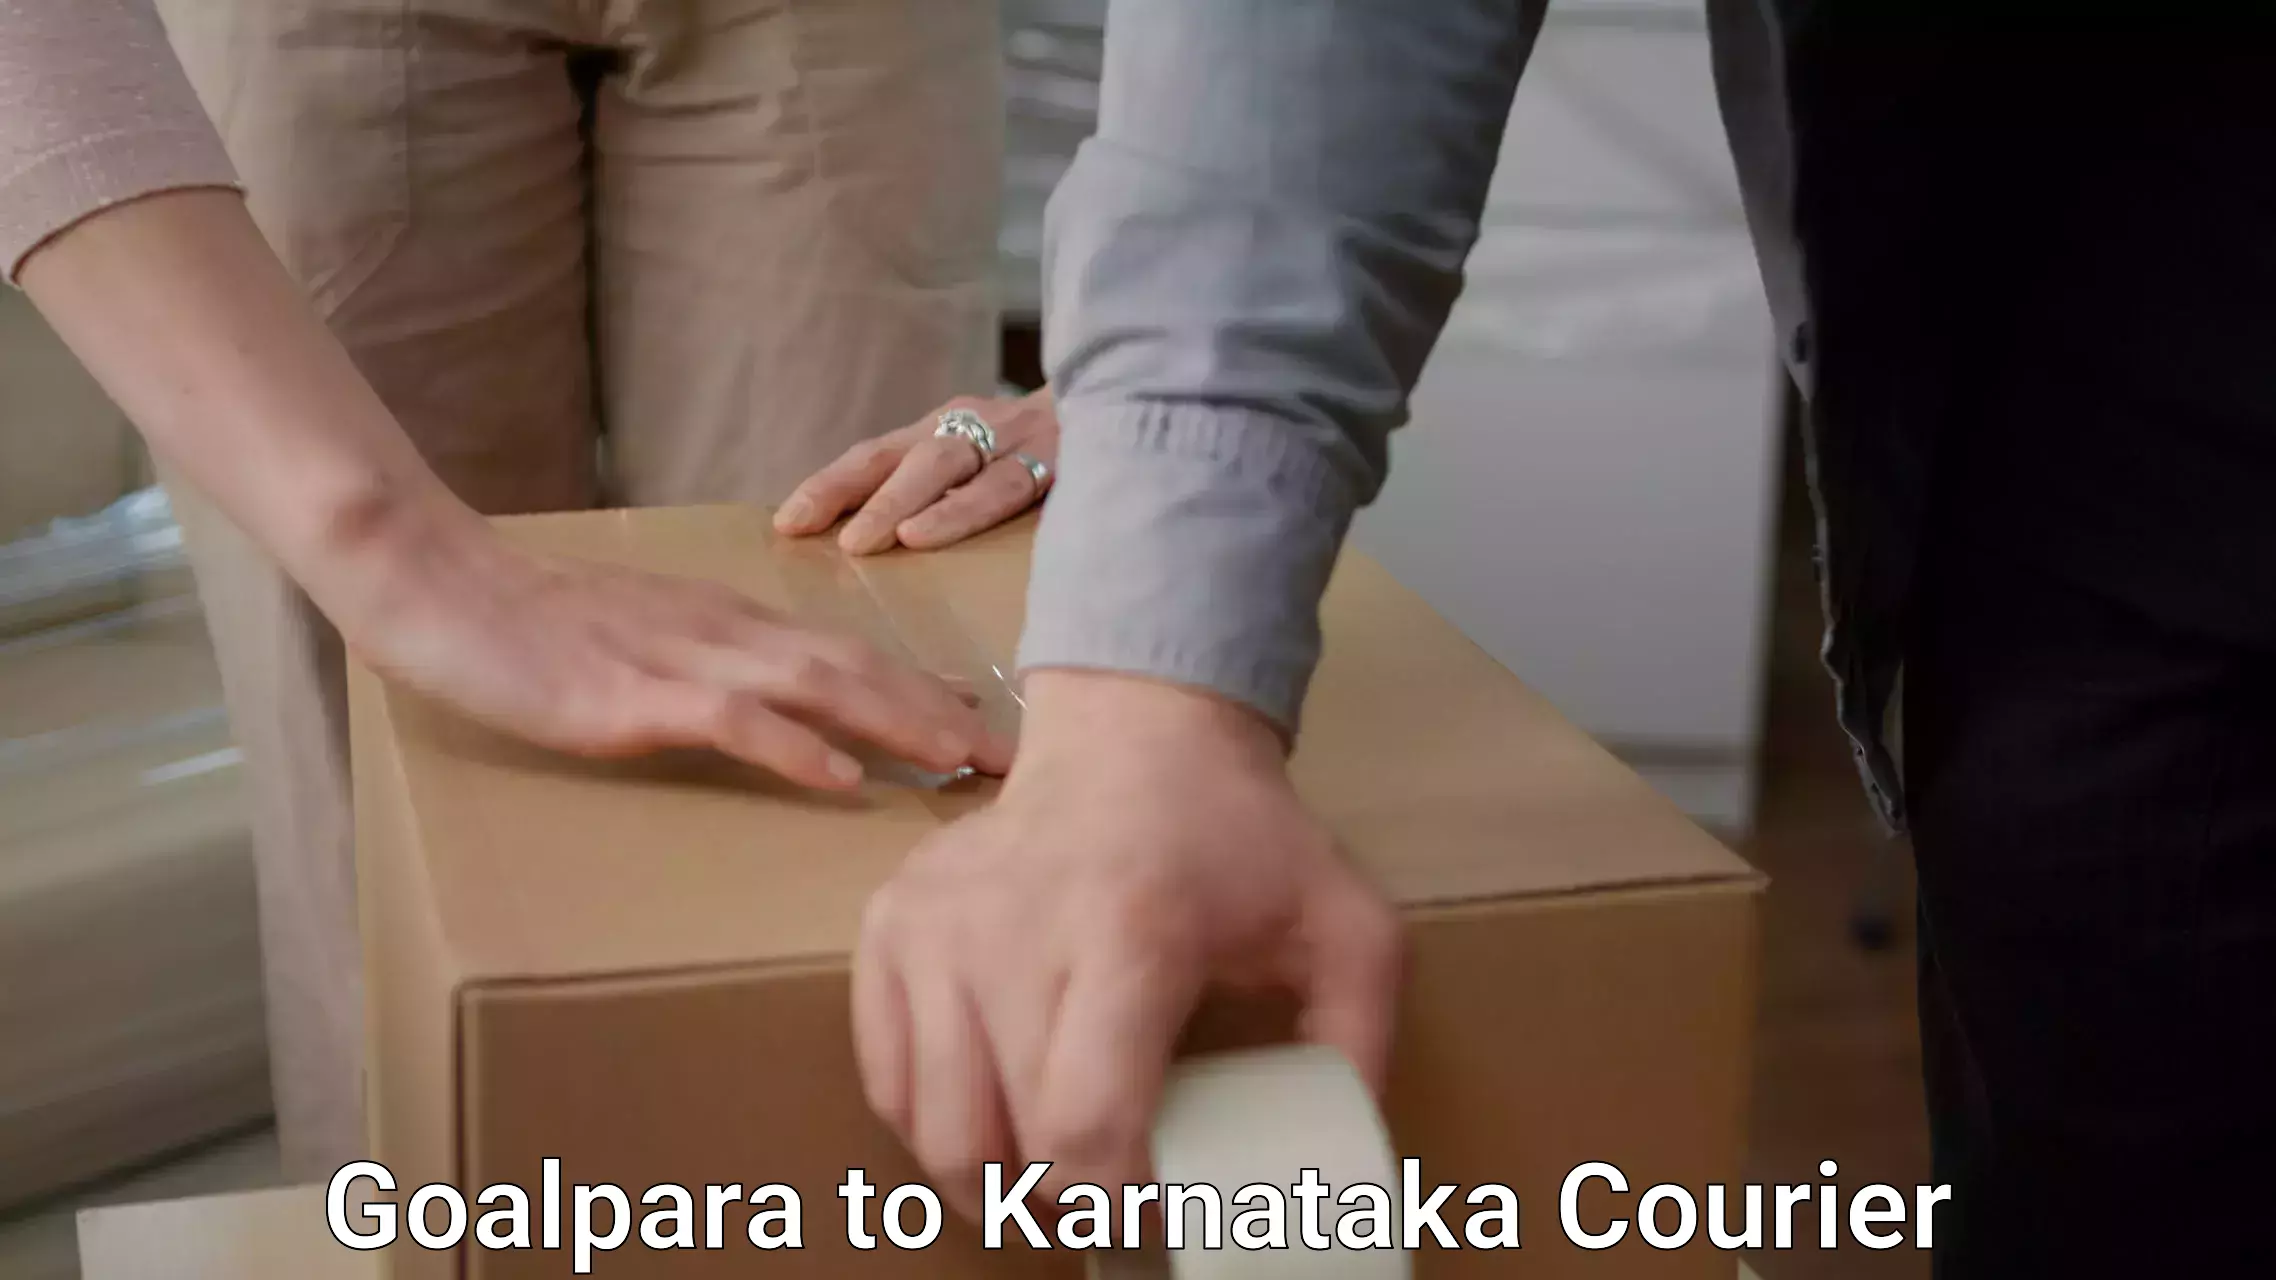 Smooth moving experience in Goalpara to Karnataka